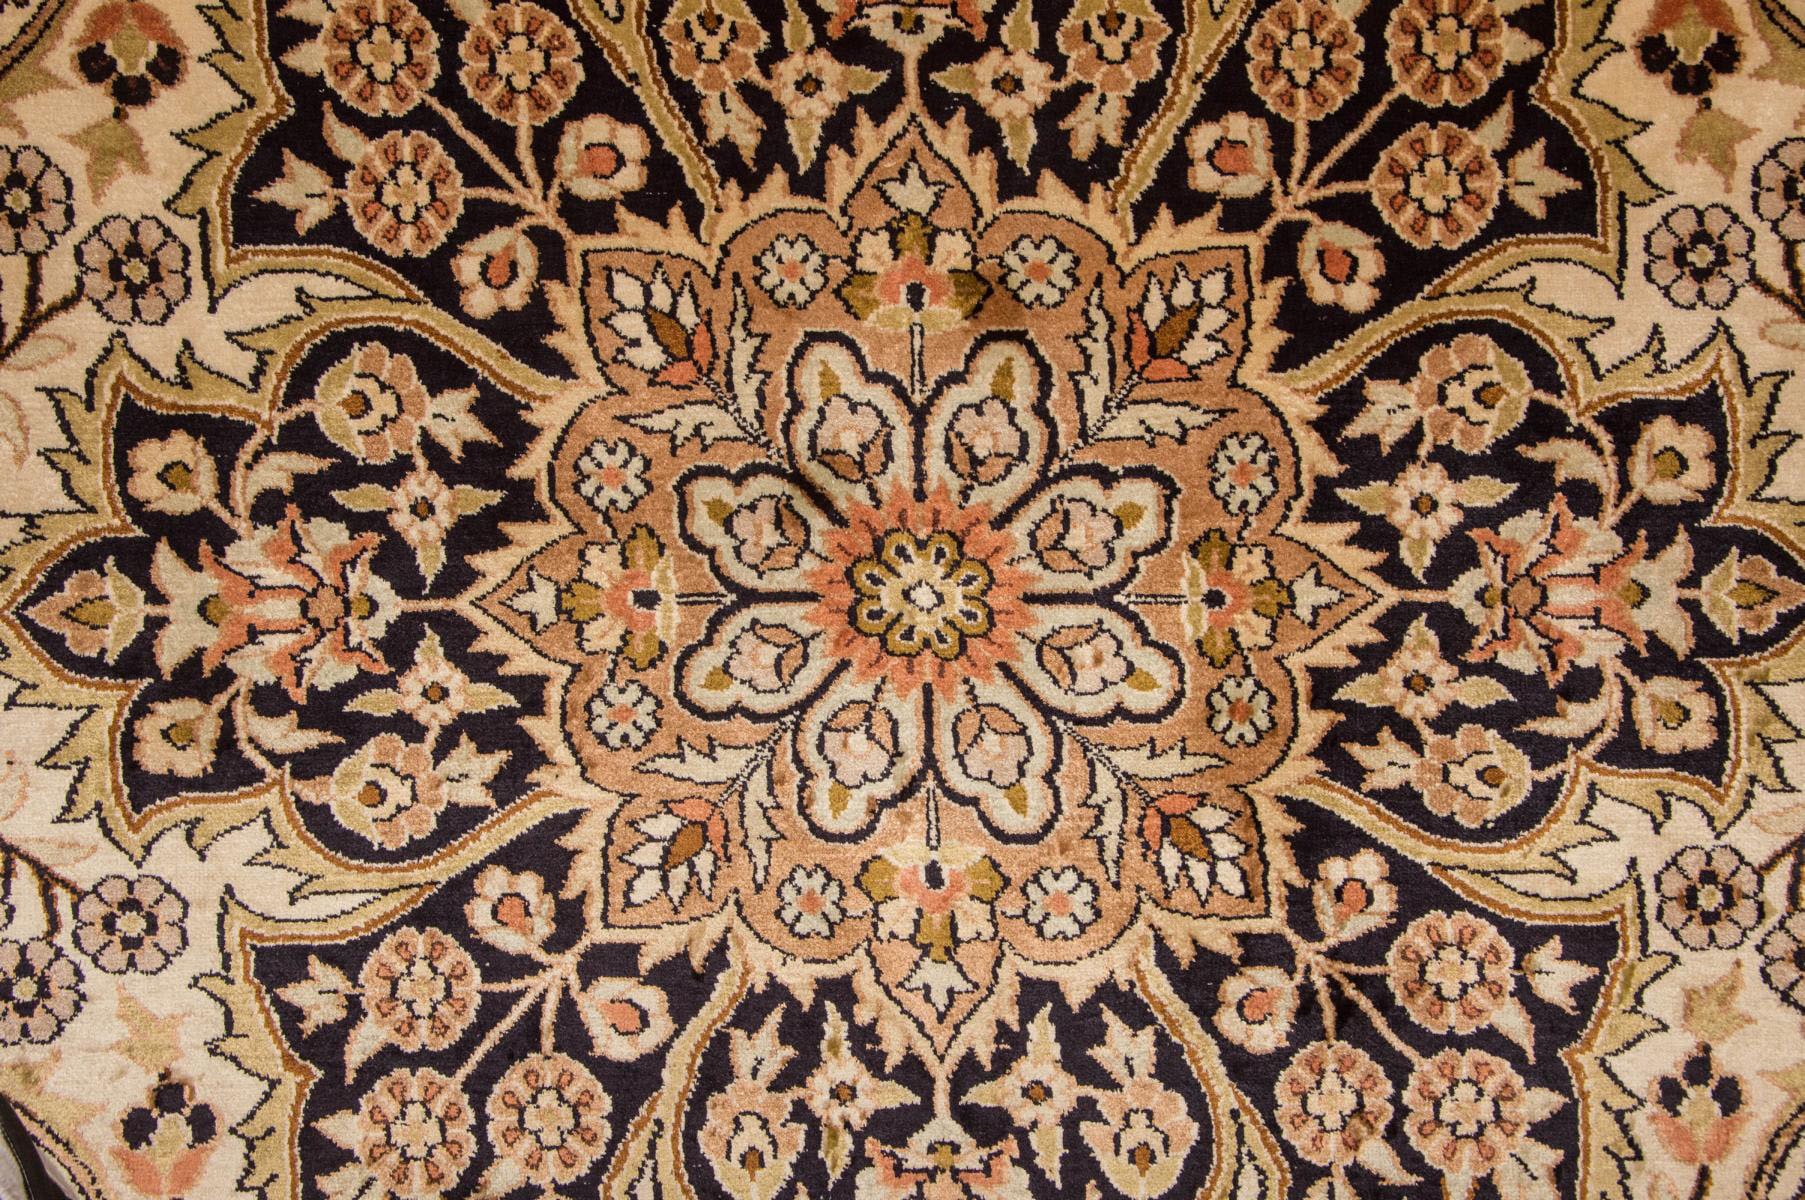 morgenland Teppich »Kaschmir Seide Teppich handgeknüpft beige«, rechteckig